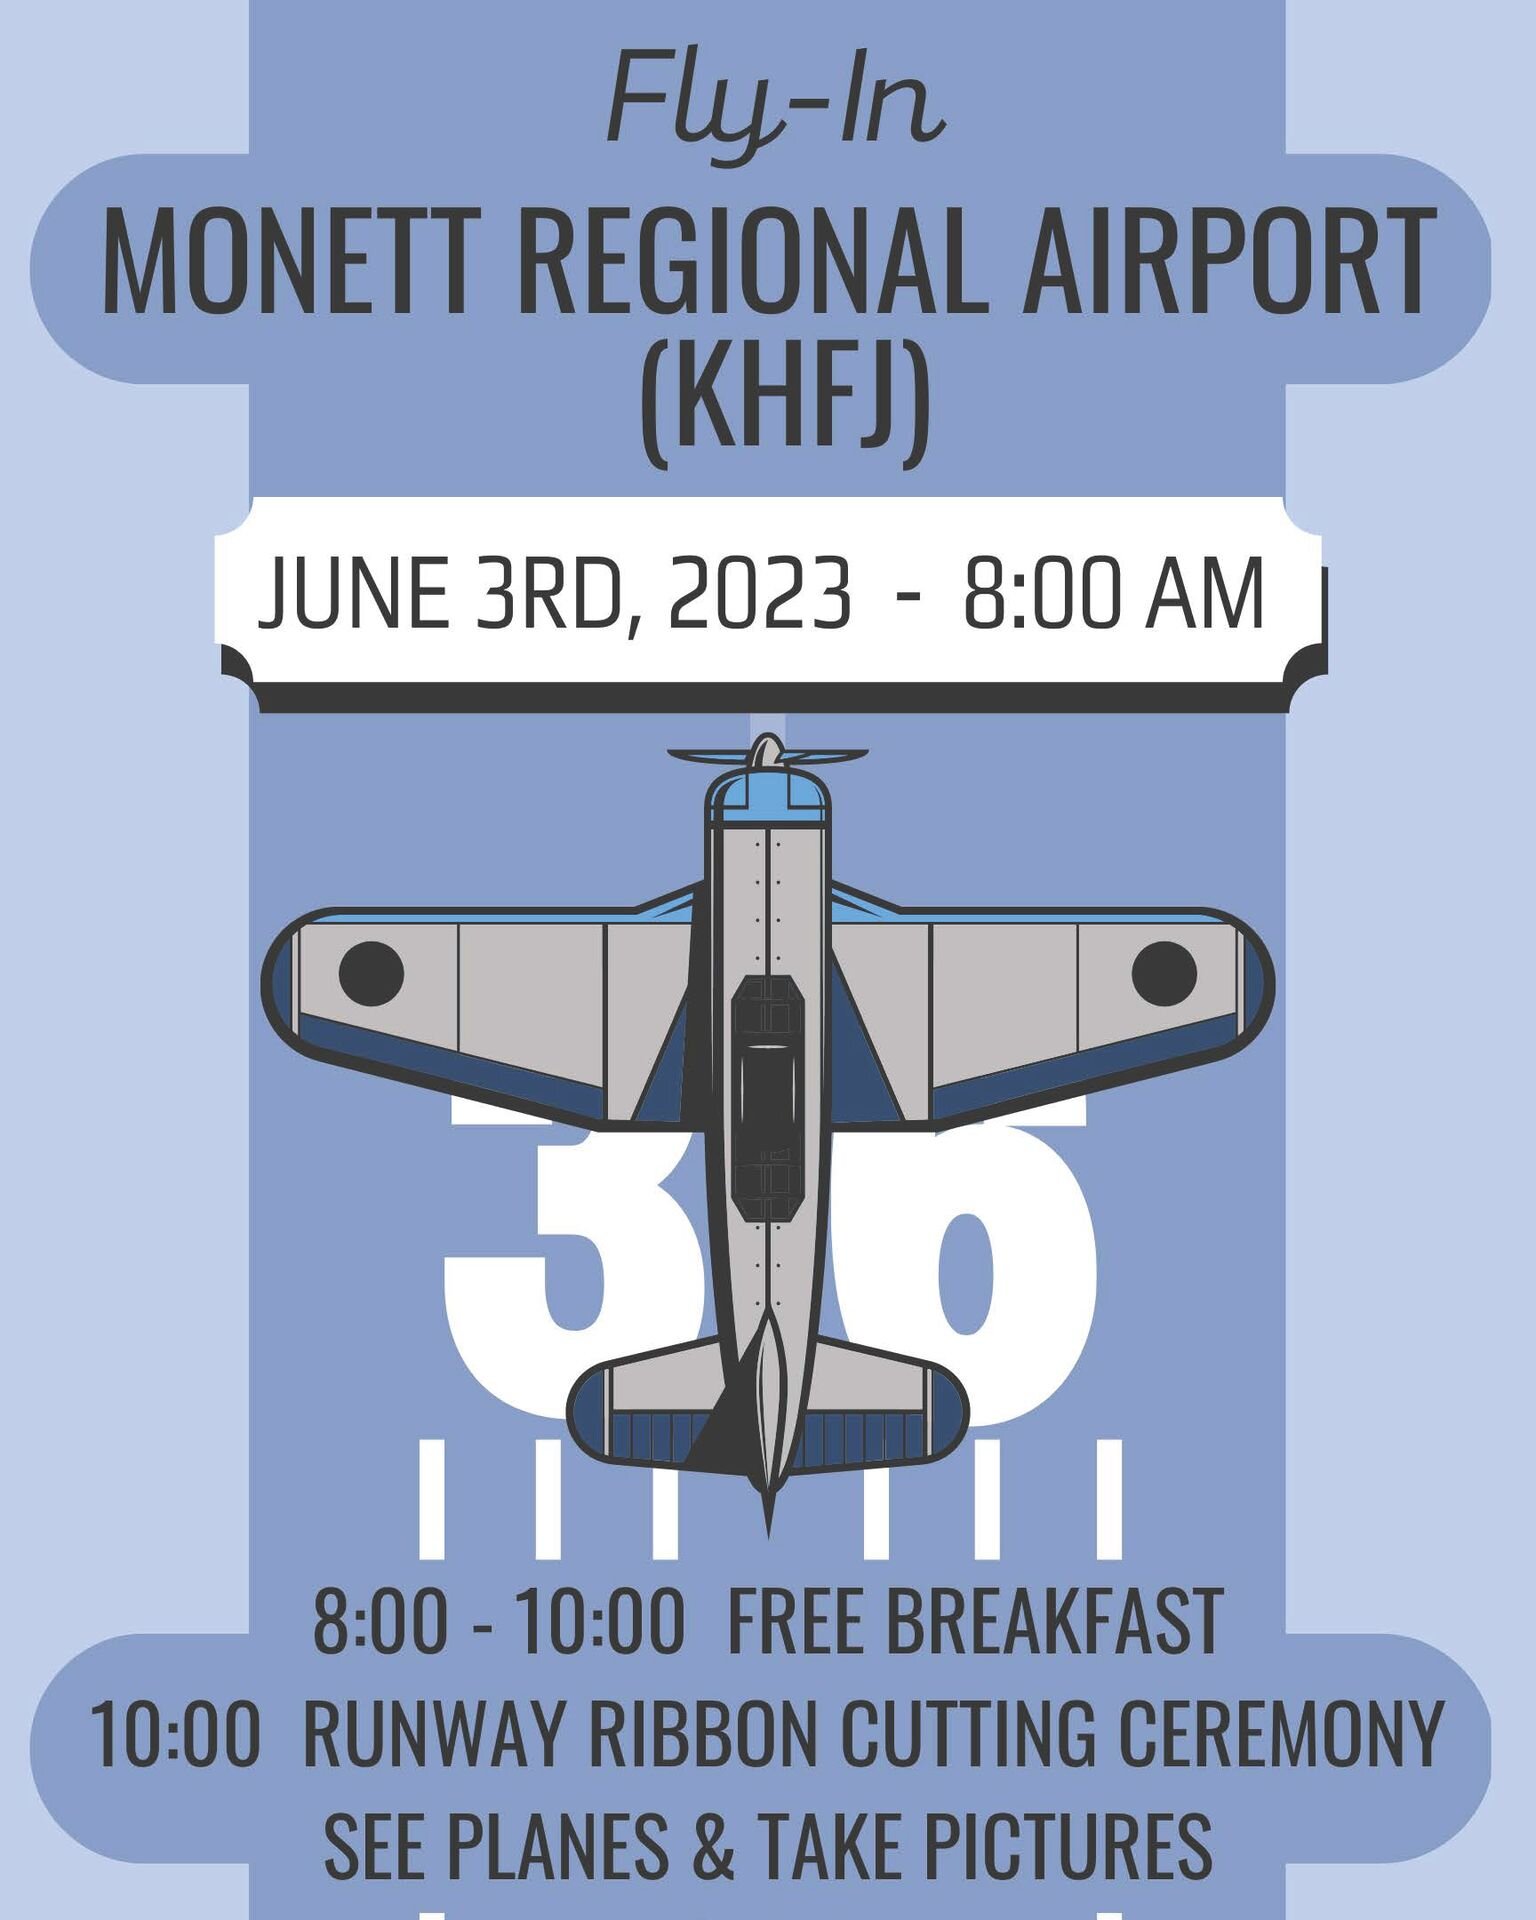 Monett Regional Airport in Monett, MO is having a Ribbon Cutting and dedication for the new 6000 ft runway. 

Dates: 6/3/23
Airport Monett Regional (KHFJ)